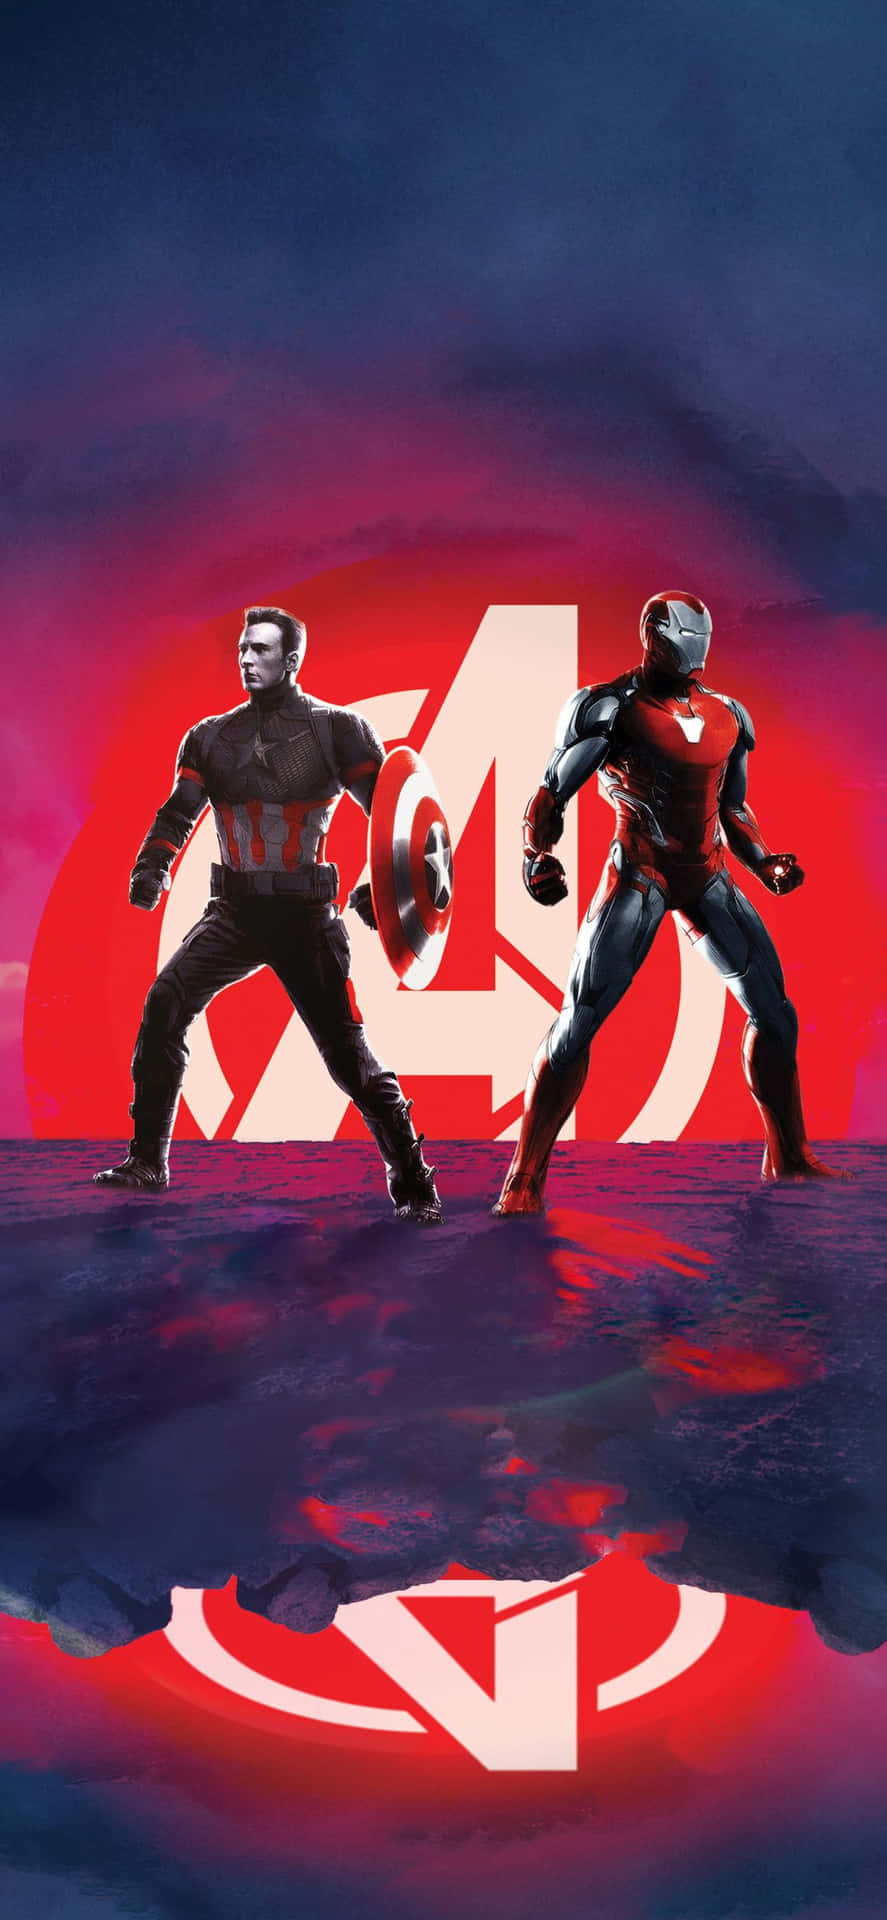 Iphonexs Avengers Bakgrundsbild Med Iron Man Och Captain America.